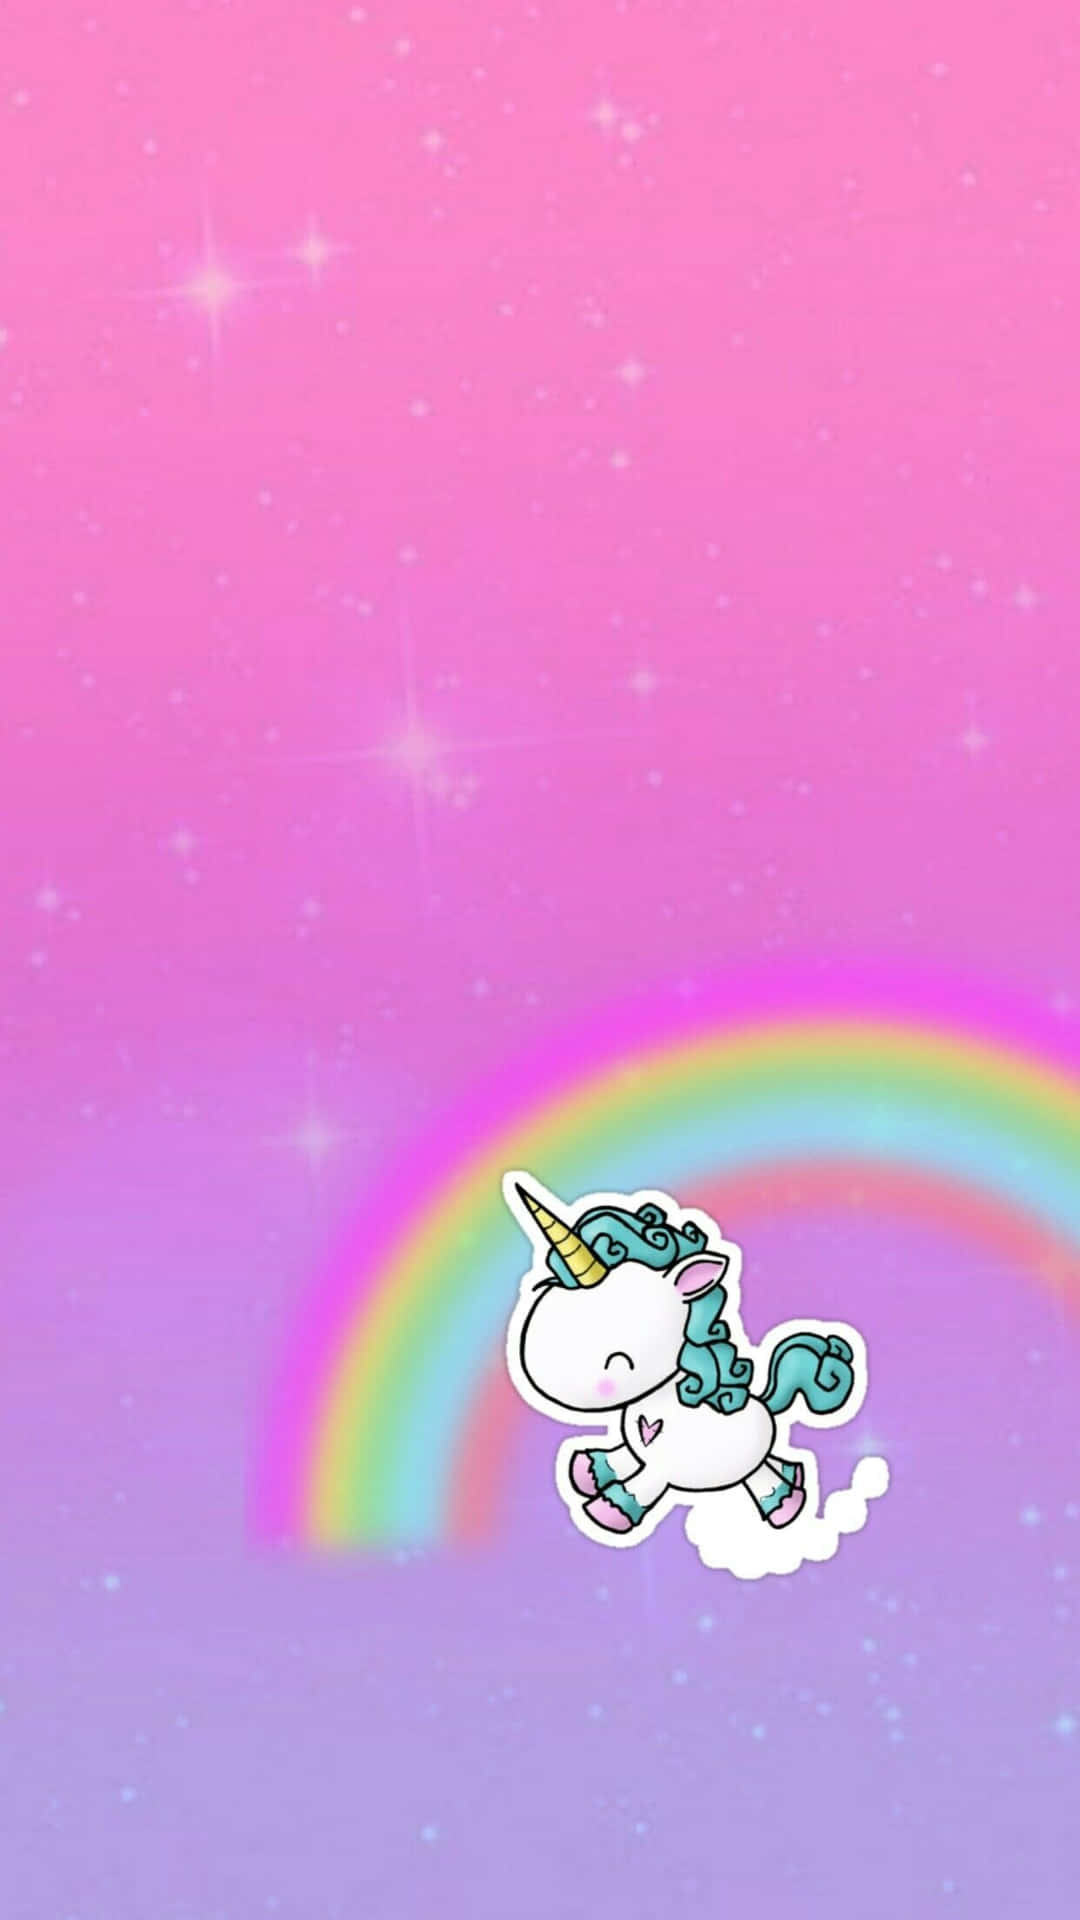 Adorable Kawaii Unicorn with Colorful Rainbow Background Wallpaper